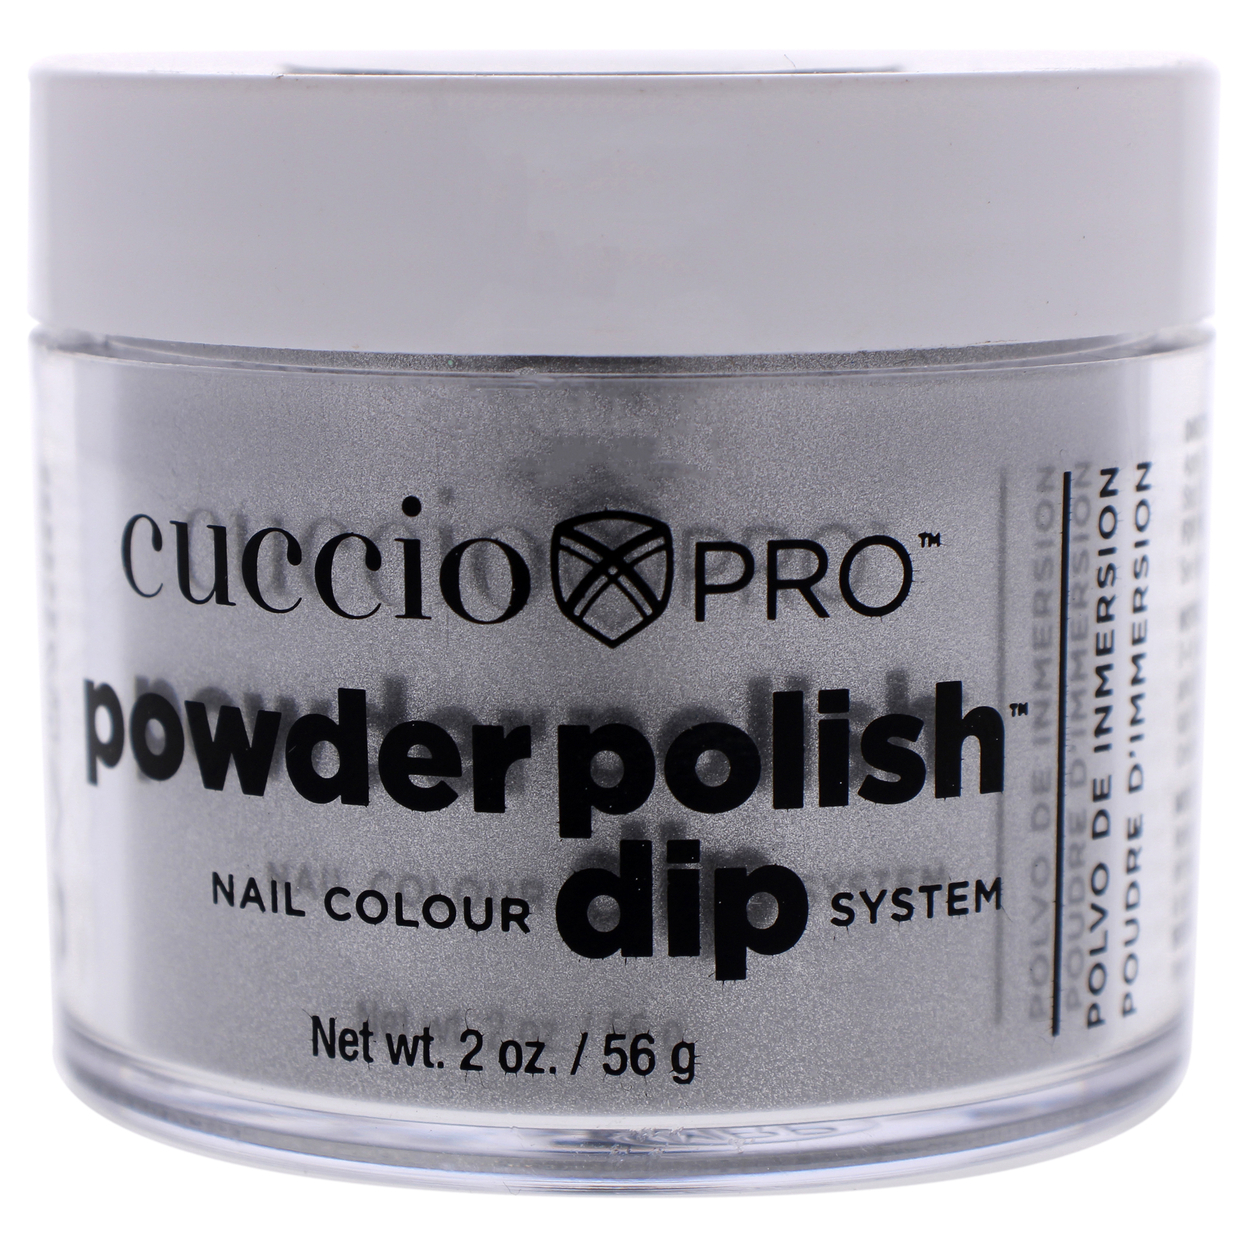 Cuccio Colour Pro Powder Polish Nail Colour Dip System - Silver With Silver Mica Nail Powder 1.6 Oz